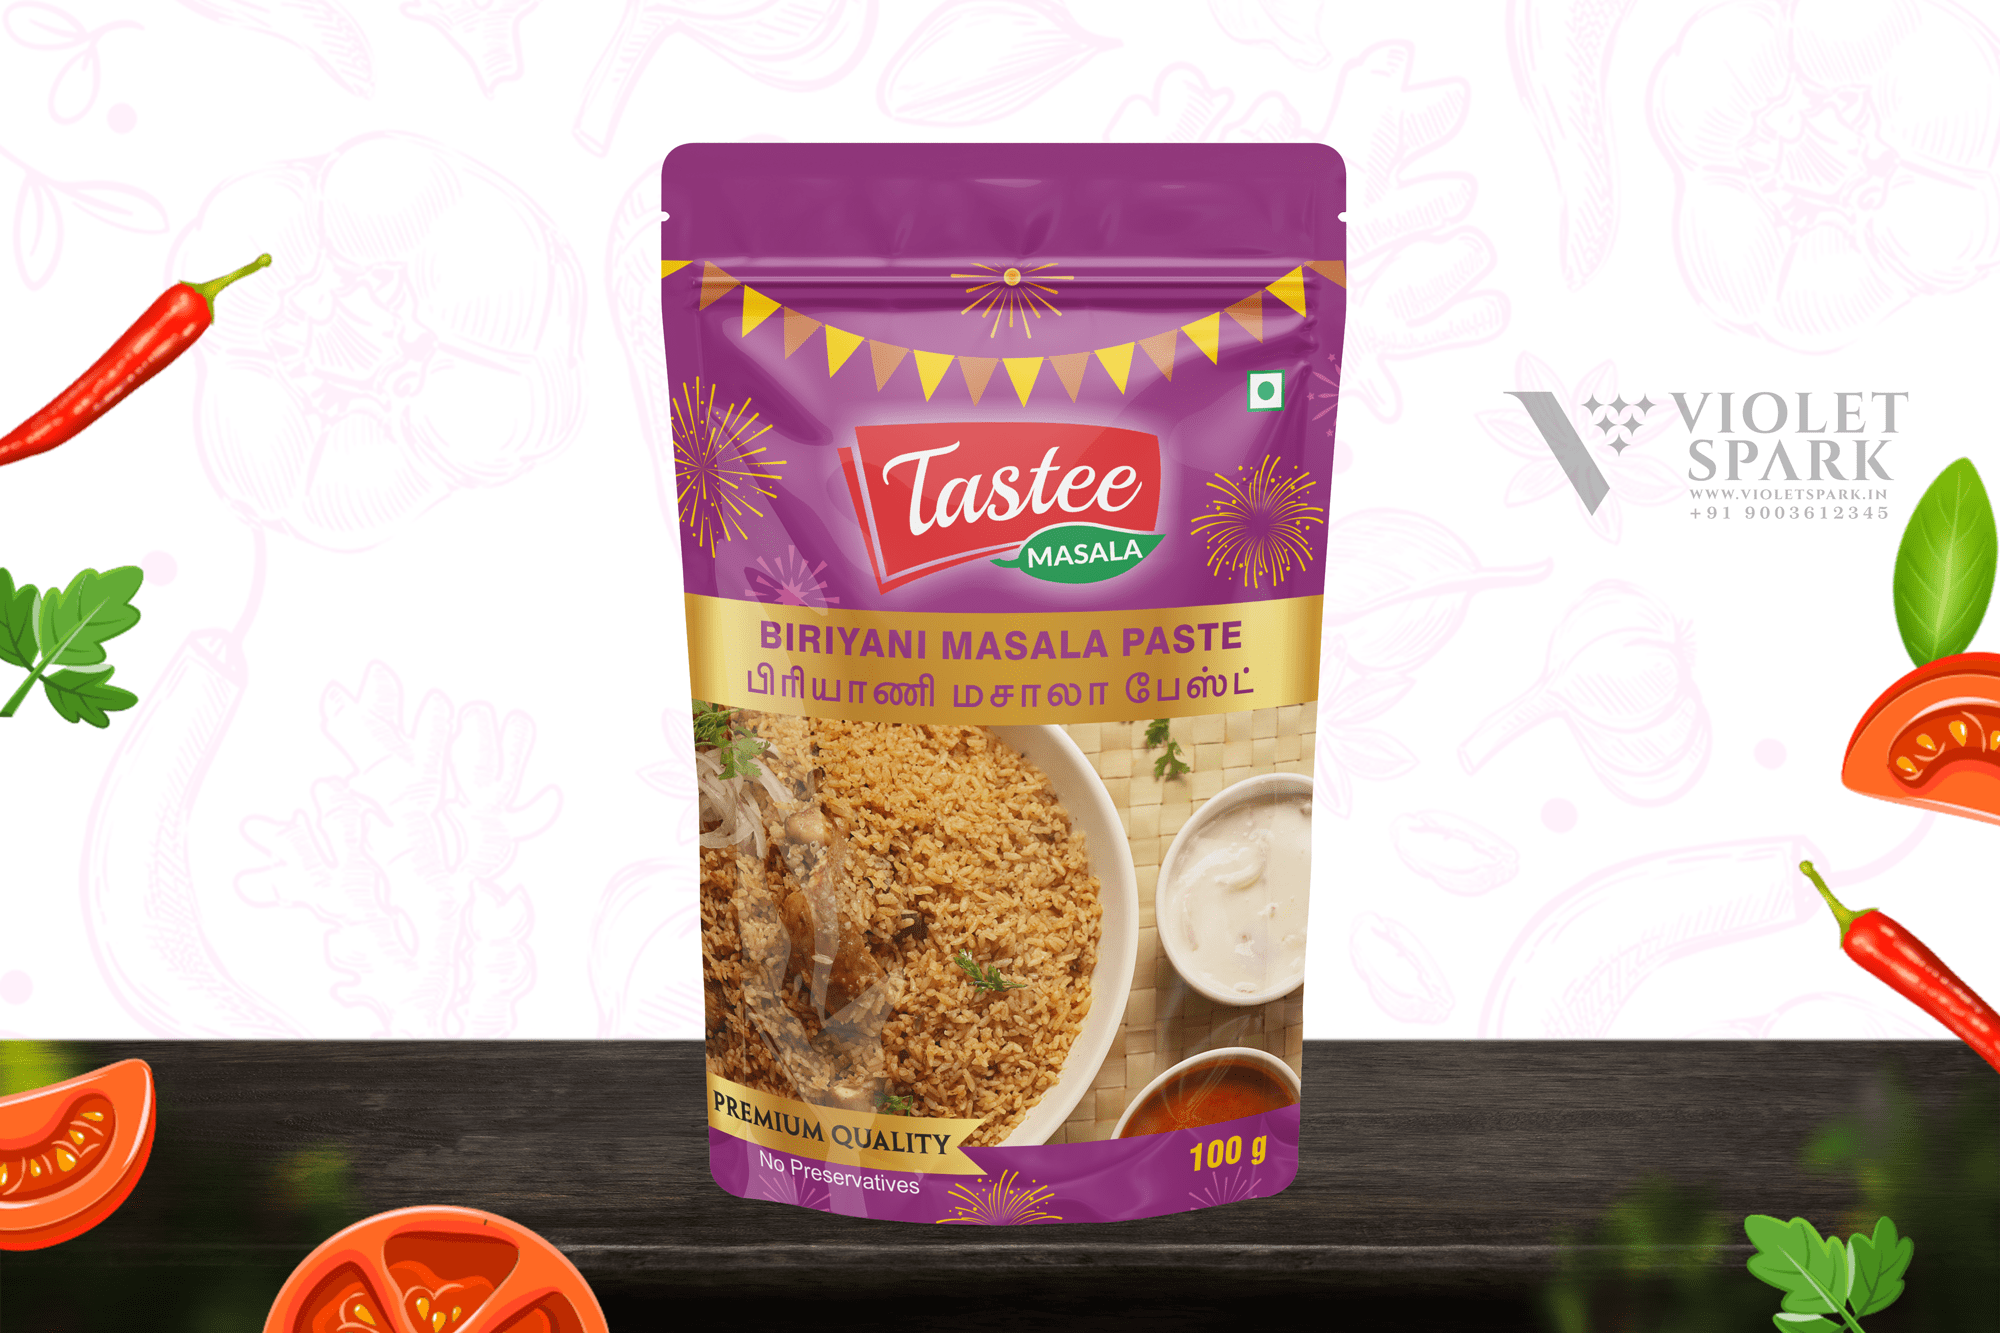 Tastee Masala Brands Biriyani Masala Paste Branding and Packaging Design in Coimbatore by Violet Spark